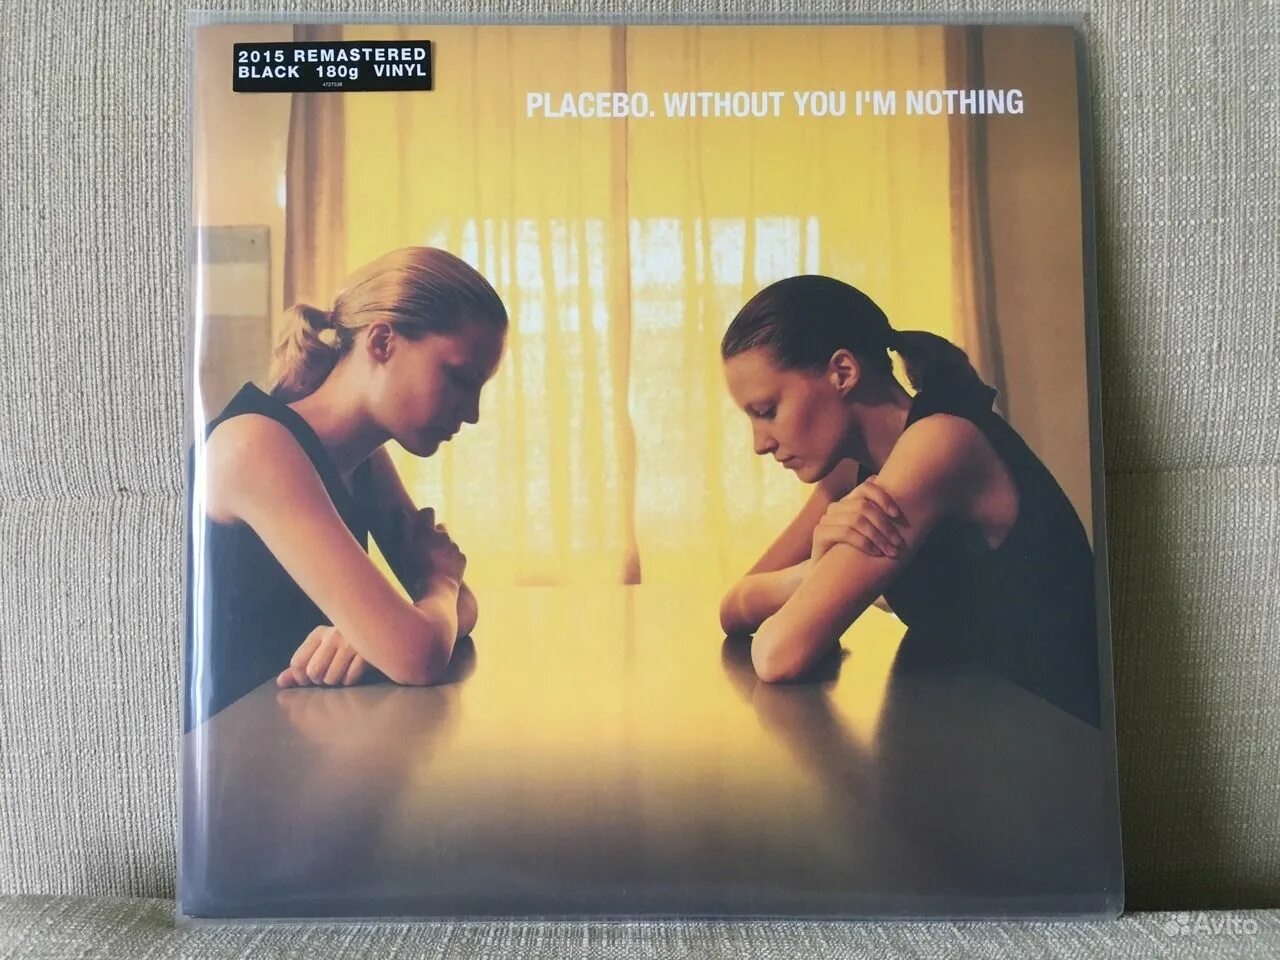 Placebo 1996 album. Placebo - "without you i'm nothing" (1998). Without you i'm nothing Placebo обложка. Placebo without you i'm nothing альбом. Without you only you